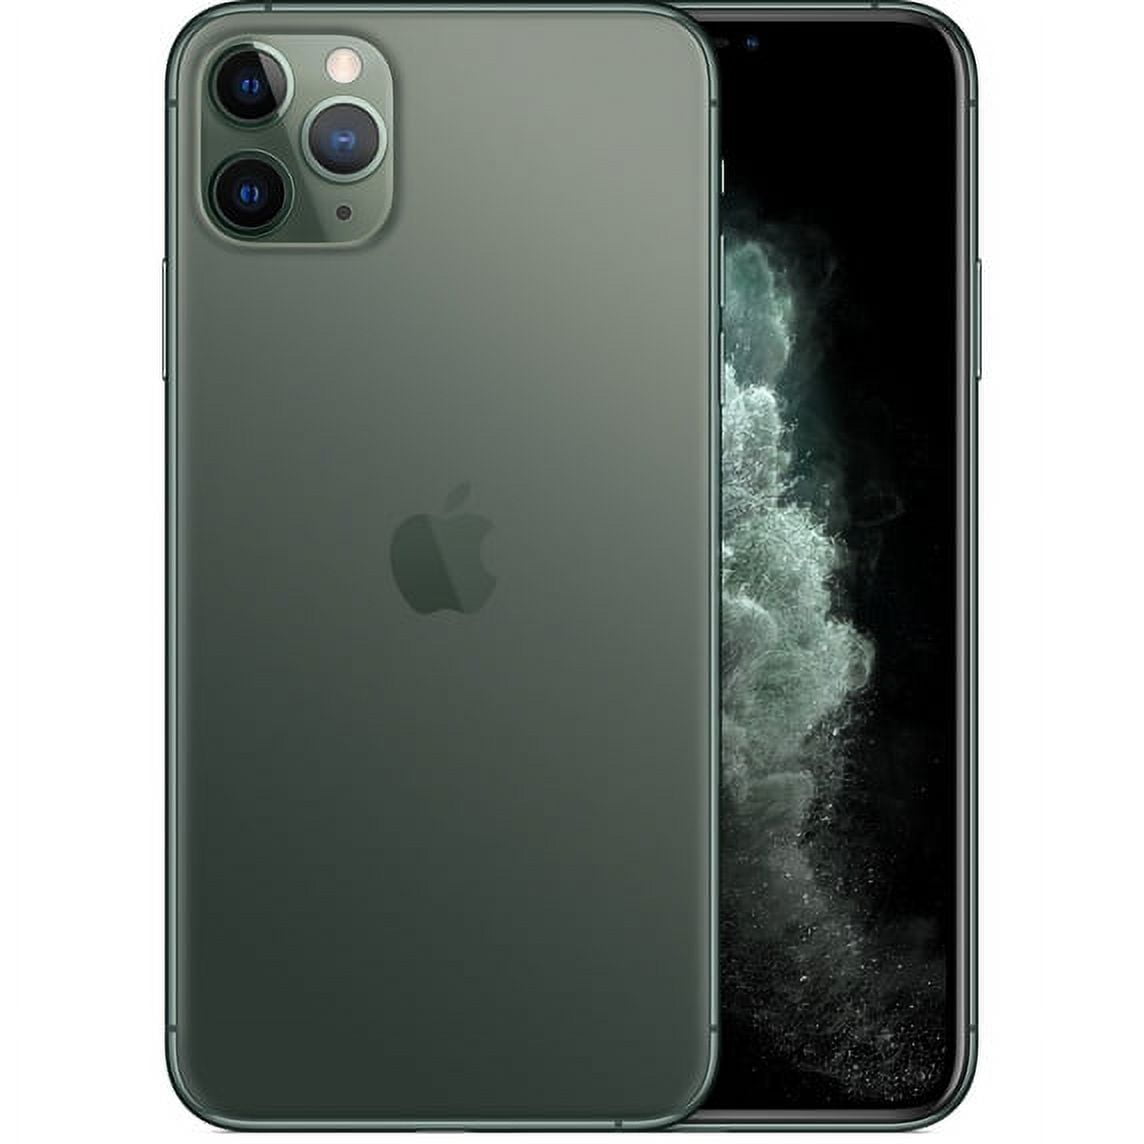 Apple iPhone 11 Pro Max 256gb Midnight Green Unlocked Smartphone